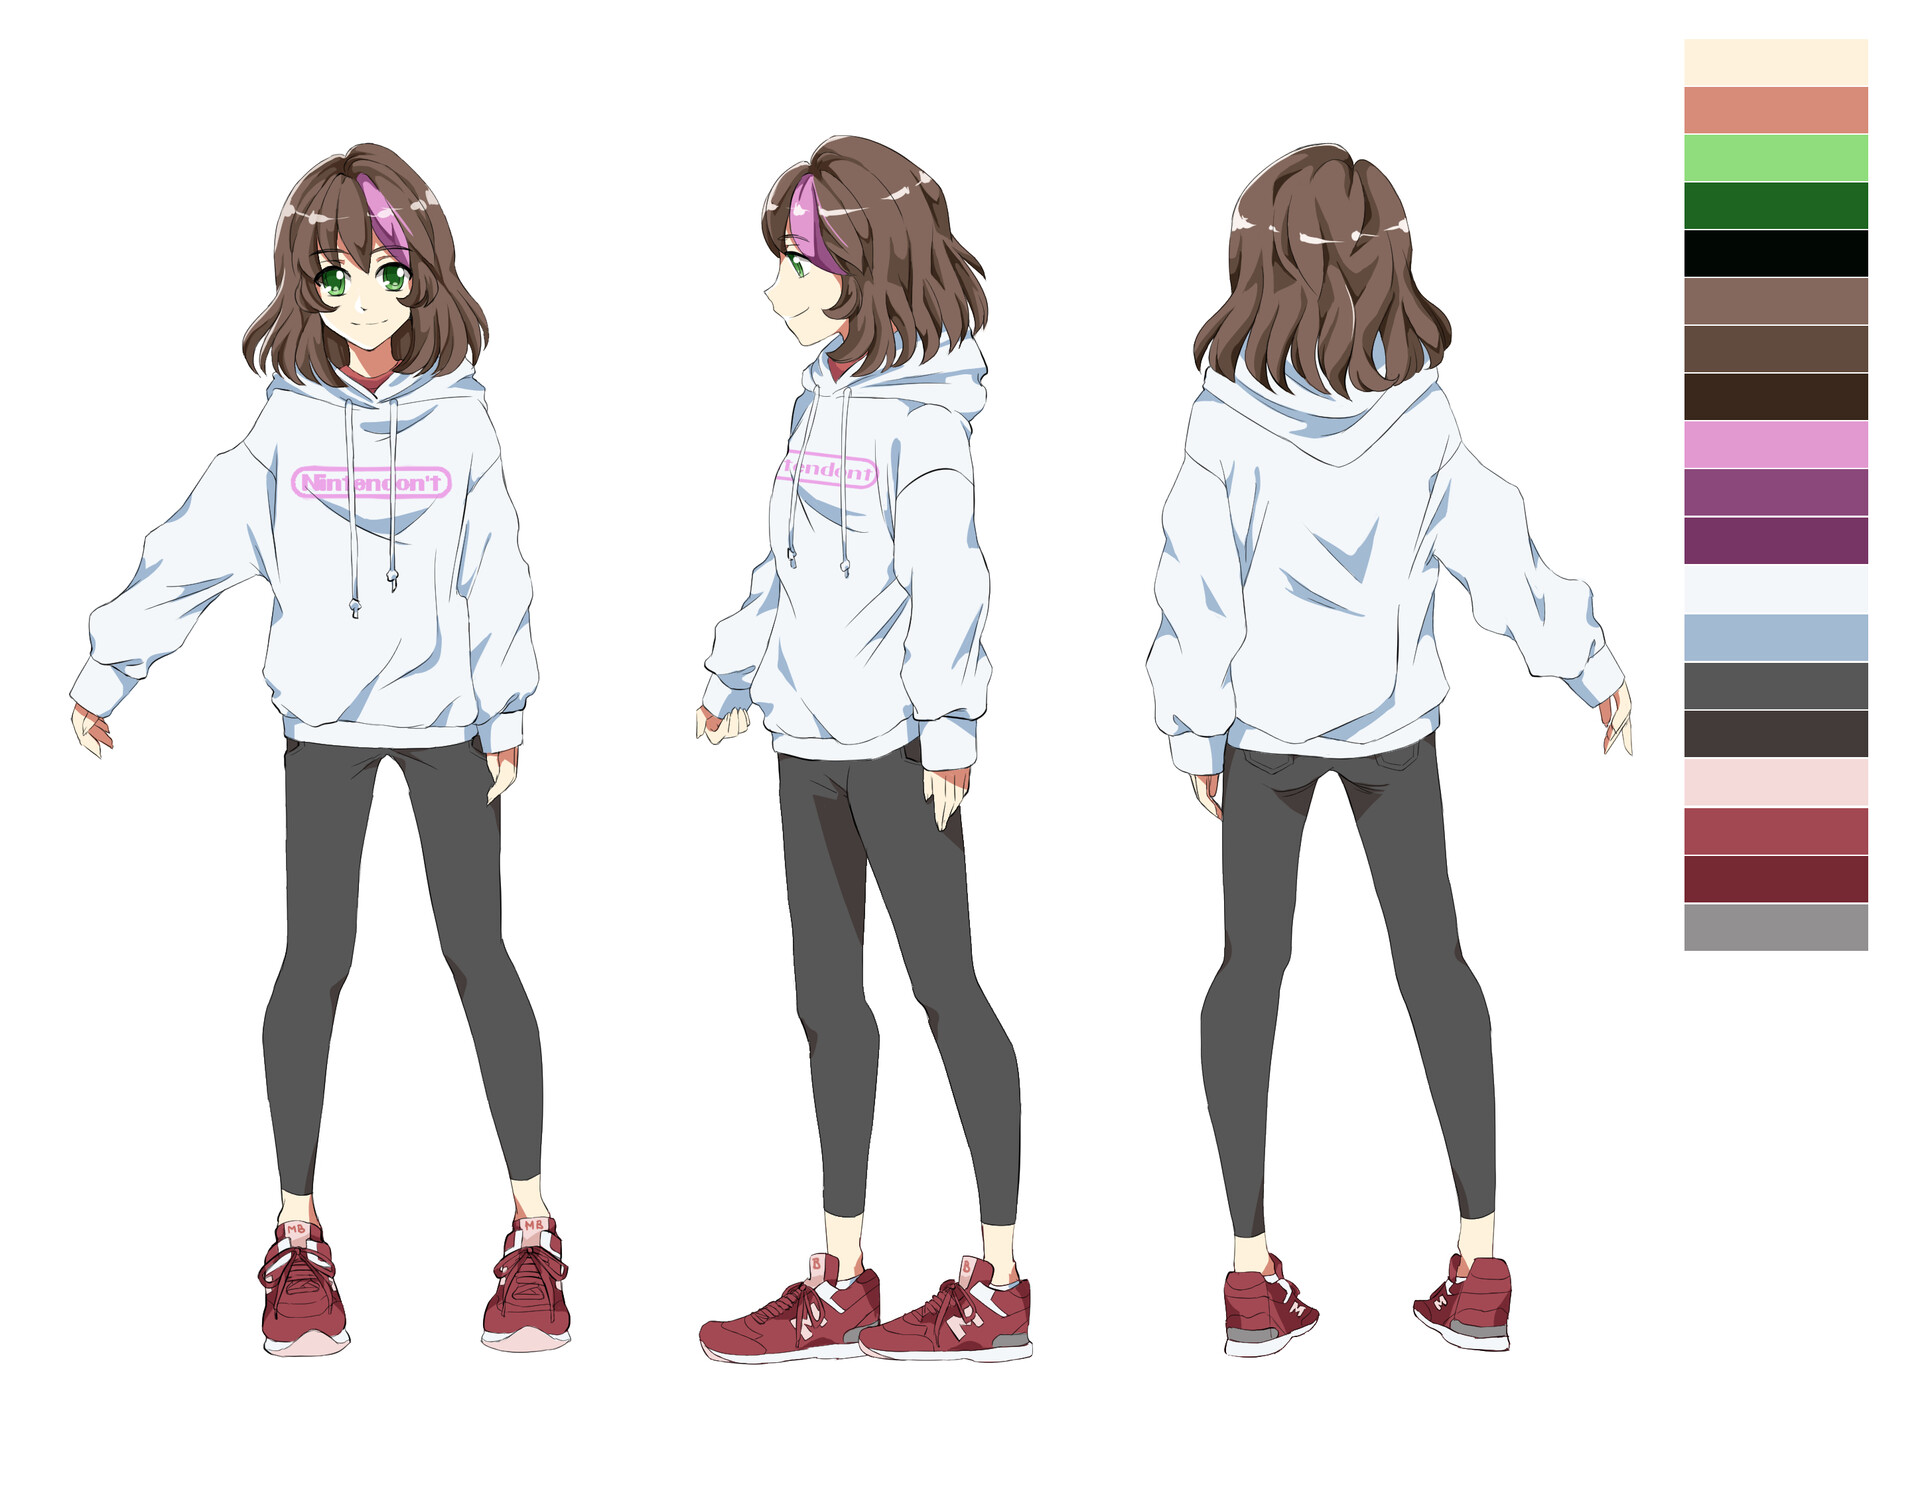 Anime character with best design  Forums  MyAnimeListnet